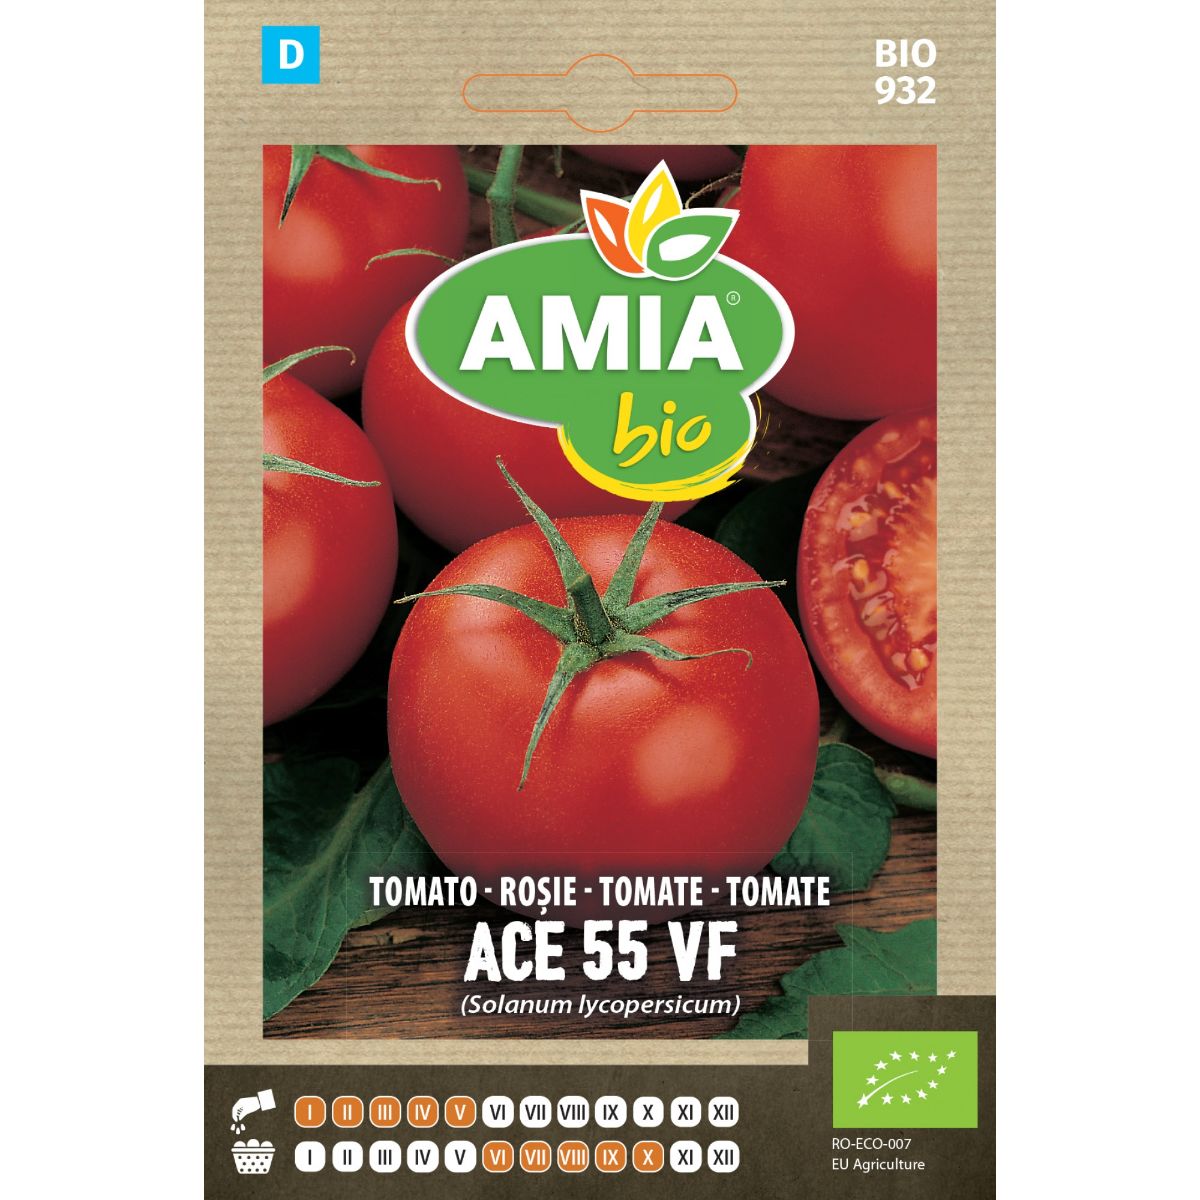 Tomate - Seminte Tomate Ace 55 VF BIO AMIA 0.15gr, hectarul.ro